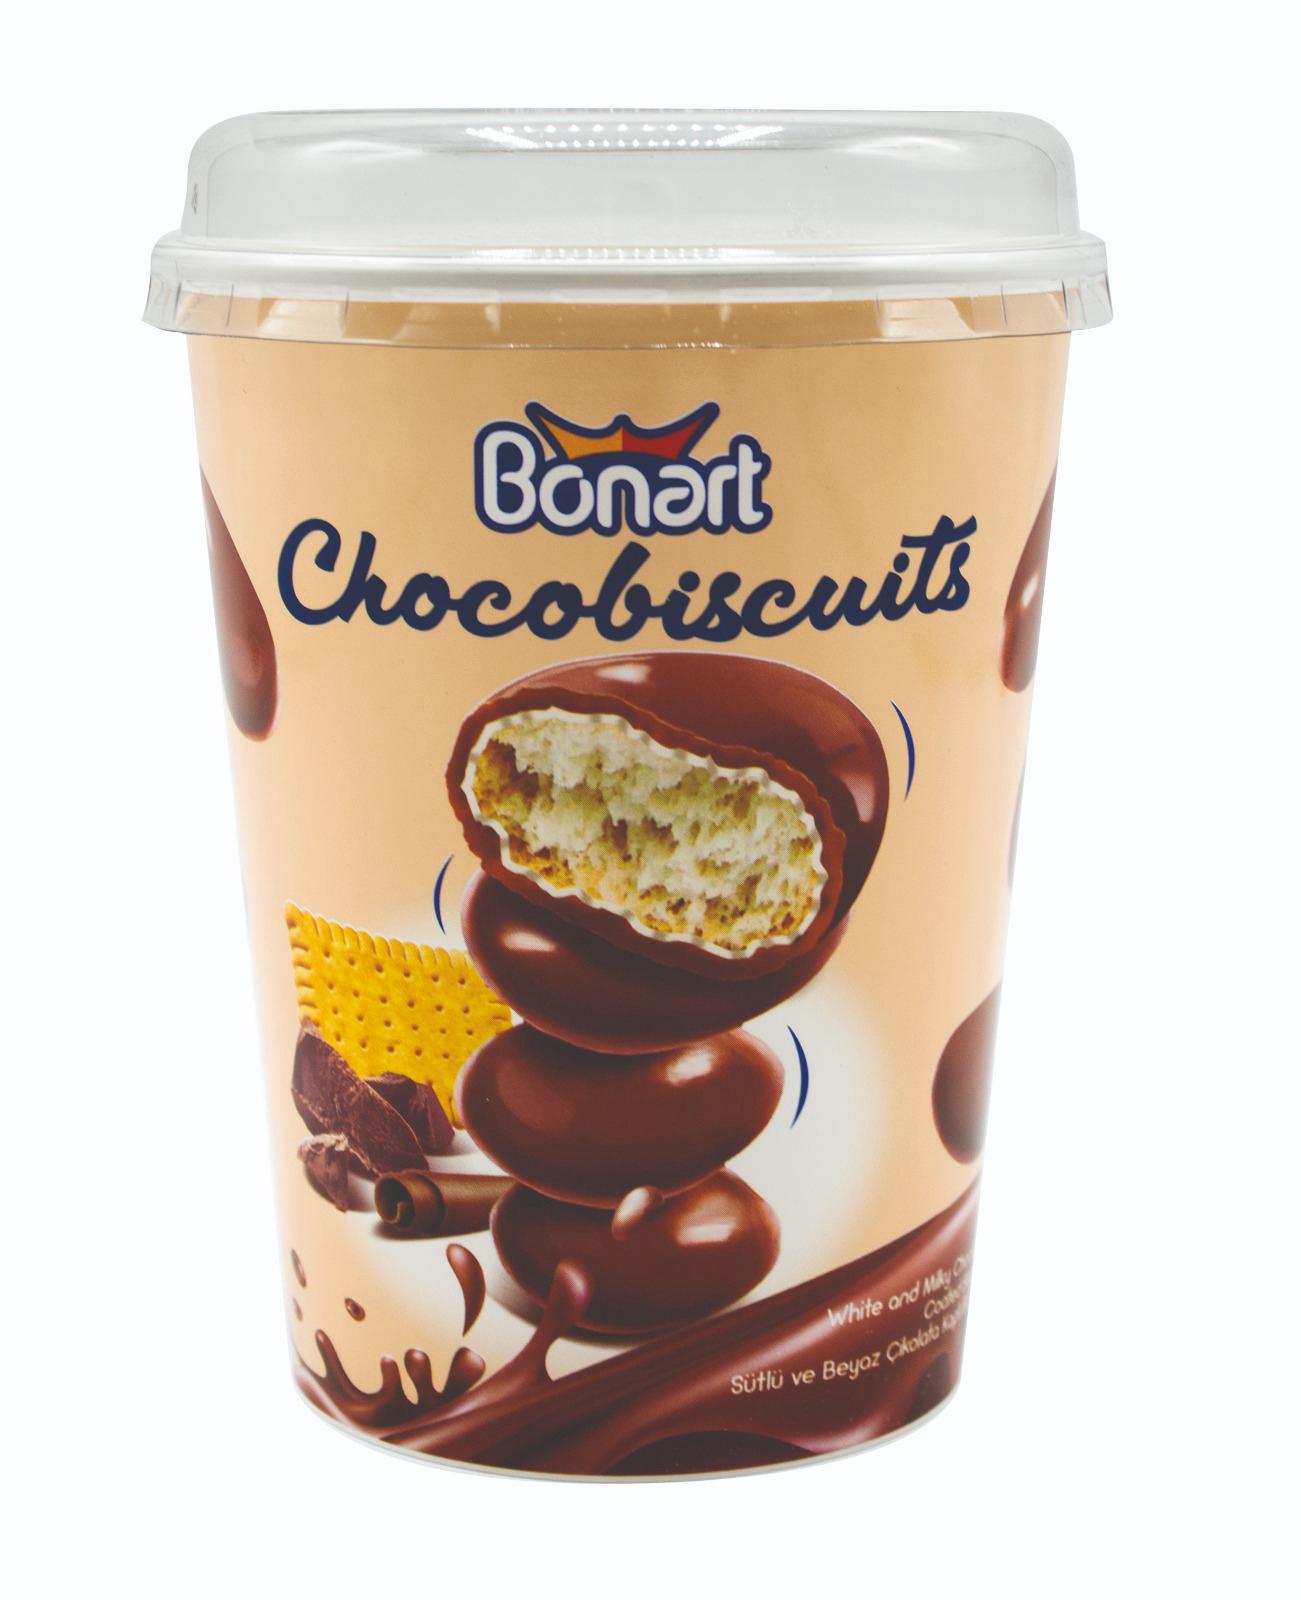 Bonart Choco Biscuits White and Milky Chocolate